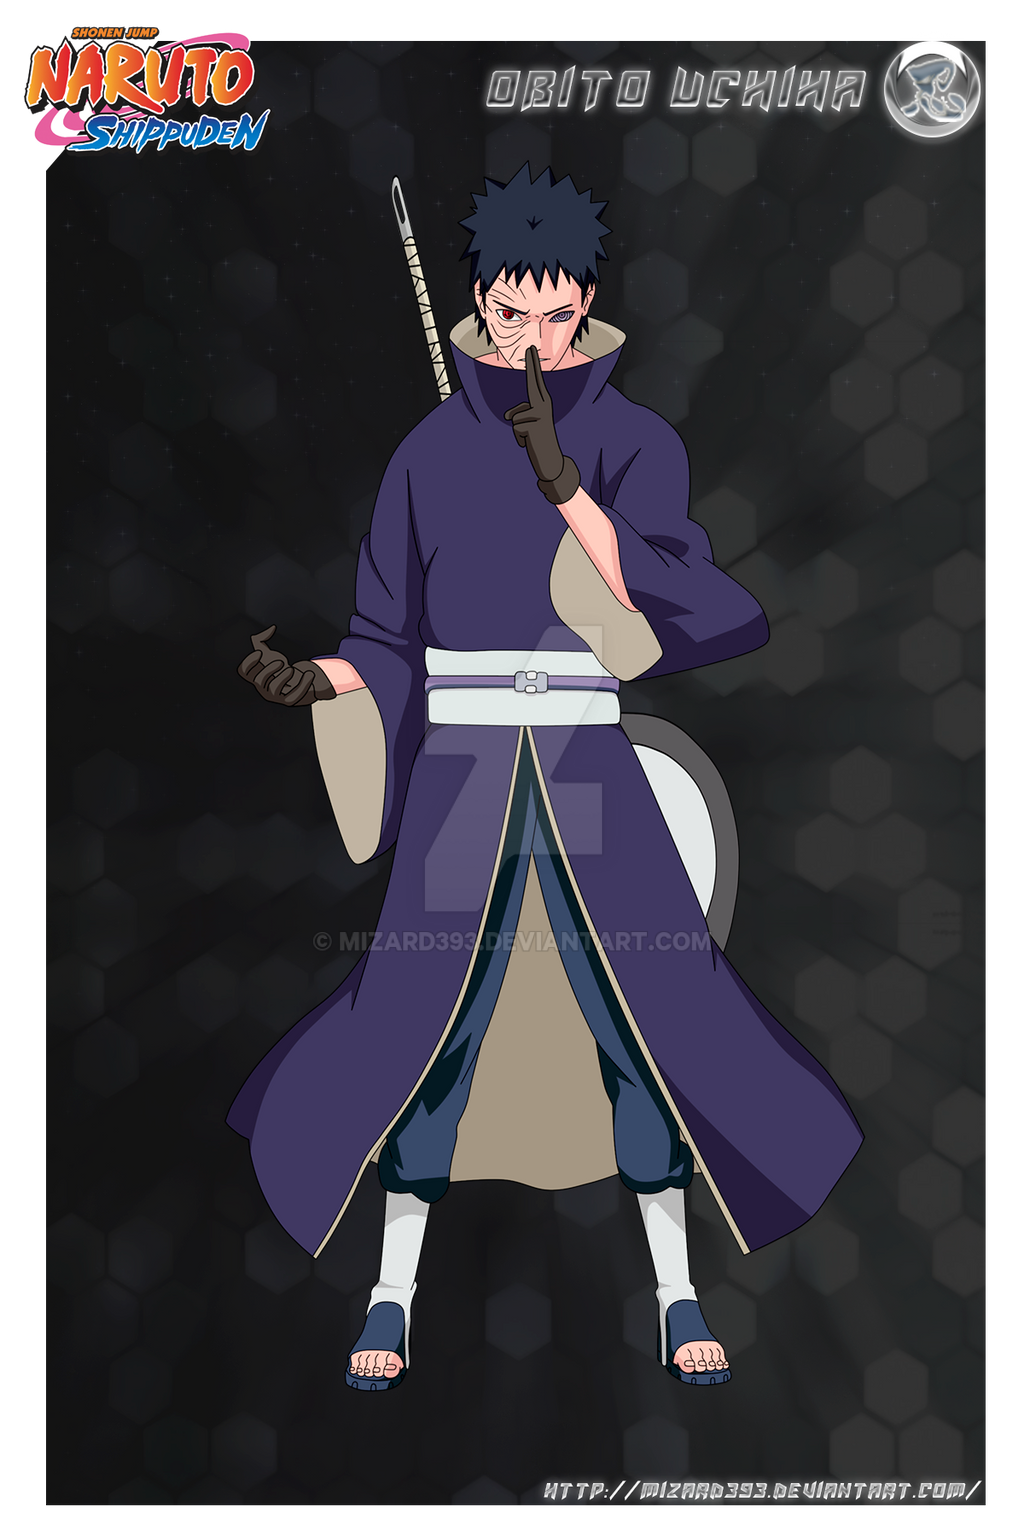 Obito Uchiha (Naruto) by josecrobledo on DeviantArt